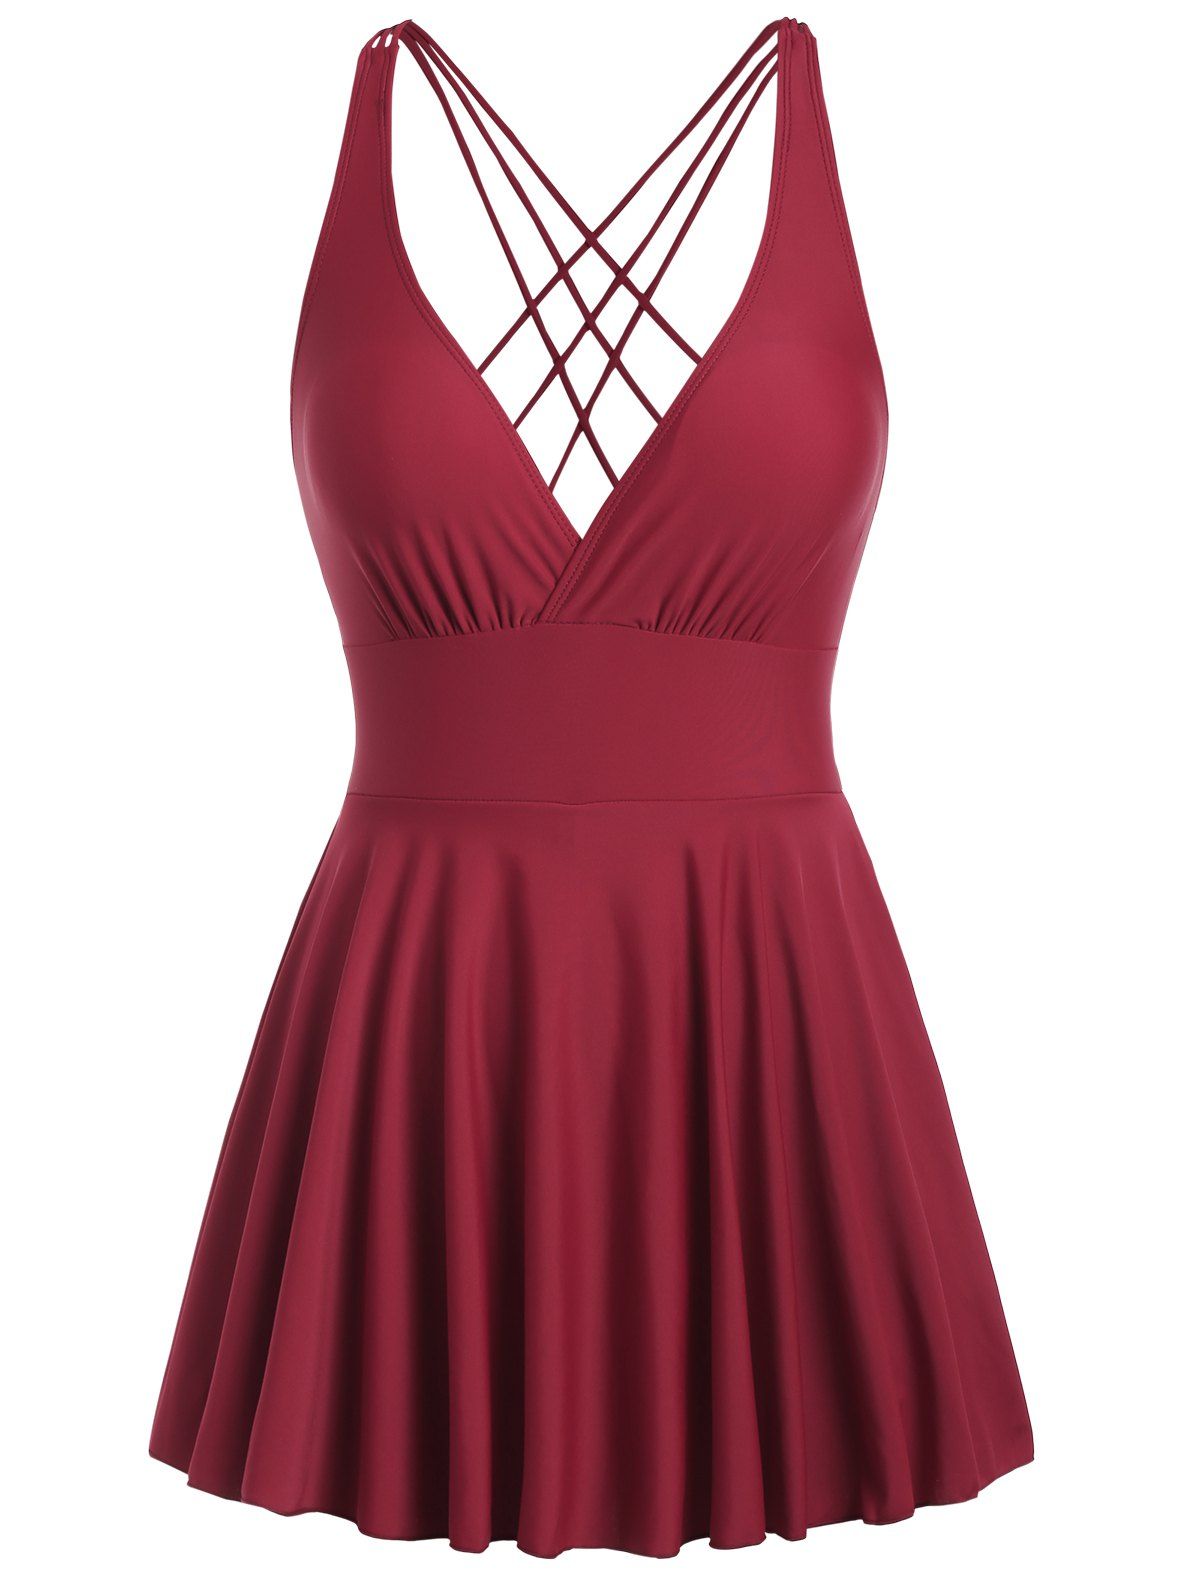 Crisscross One-piece Swimsuit Solid Color Plunging Neck High Waist Ruffle Swimwear - DEEP RED XL